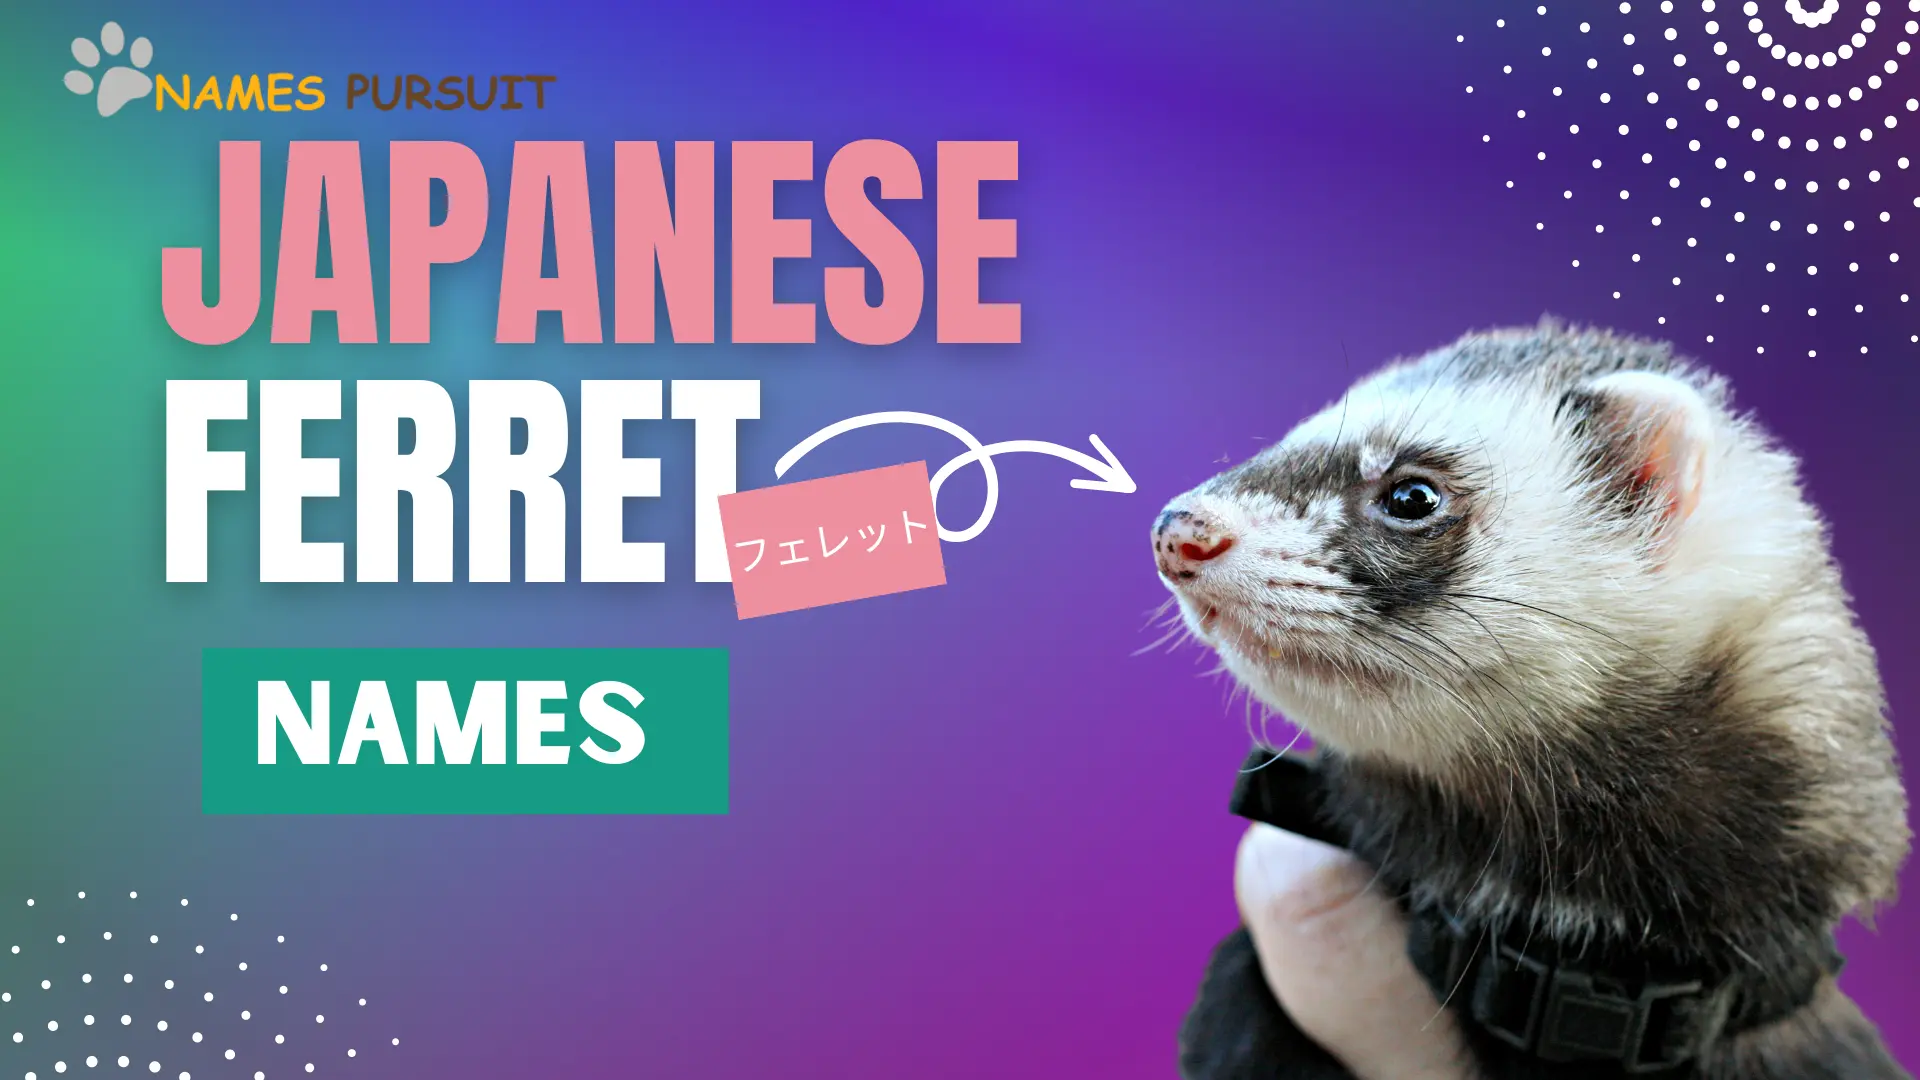 japanese ferret name